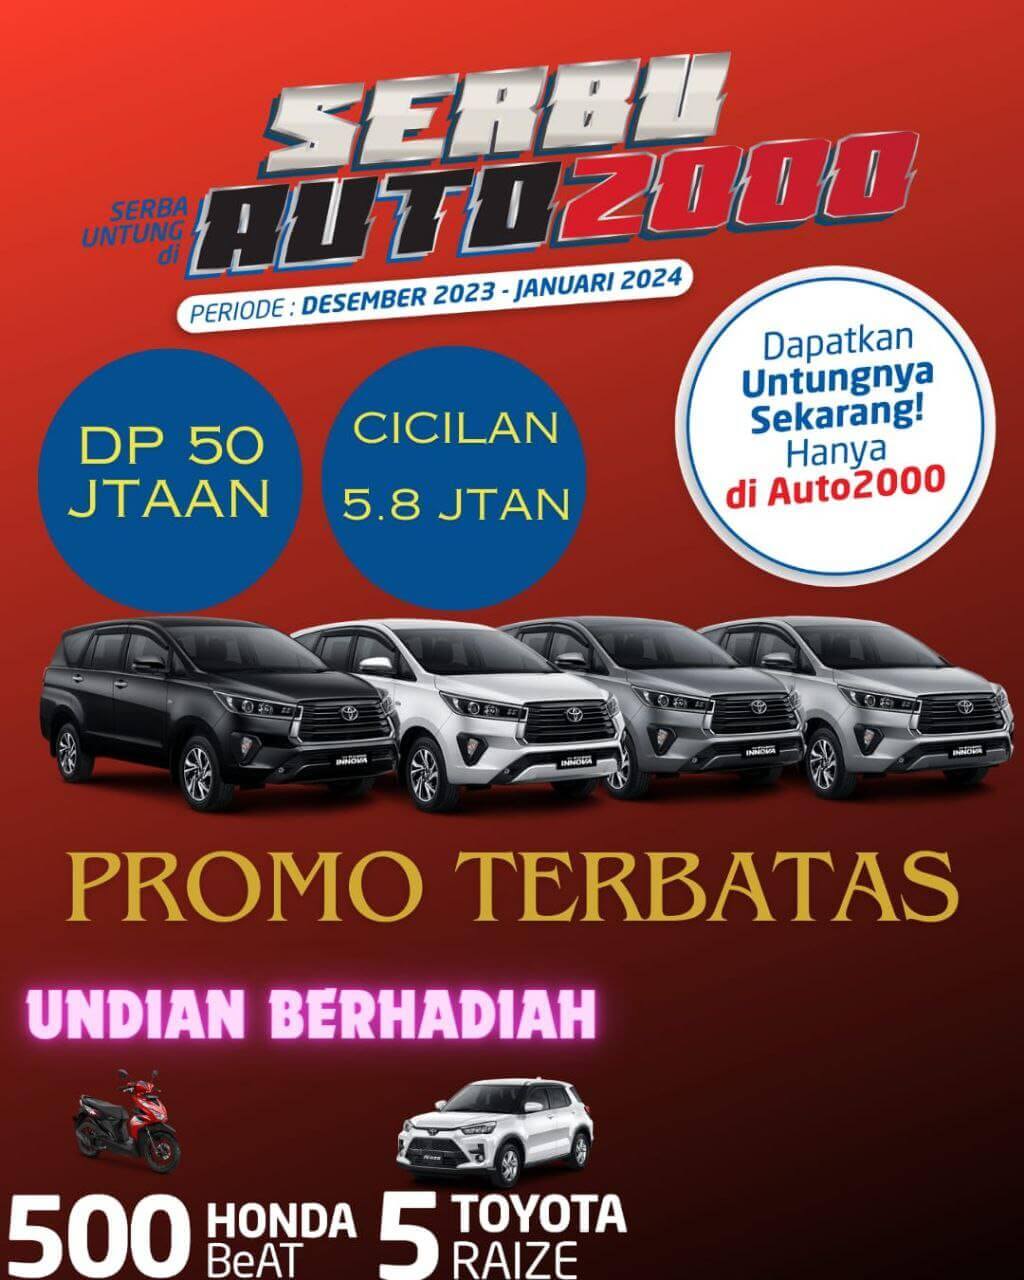 Spesial Promo SERBU Serba Untung Di Auto2000 Toyota Medan